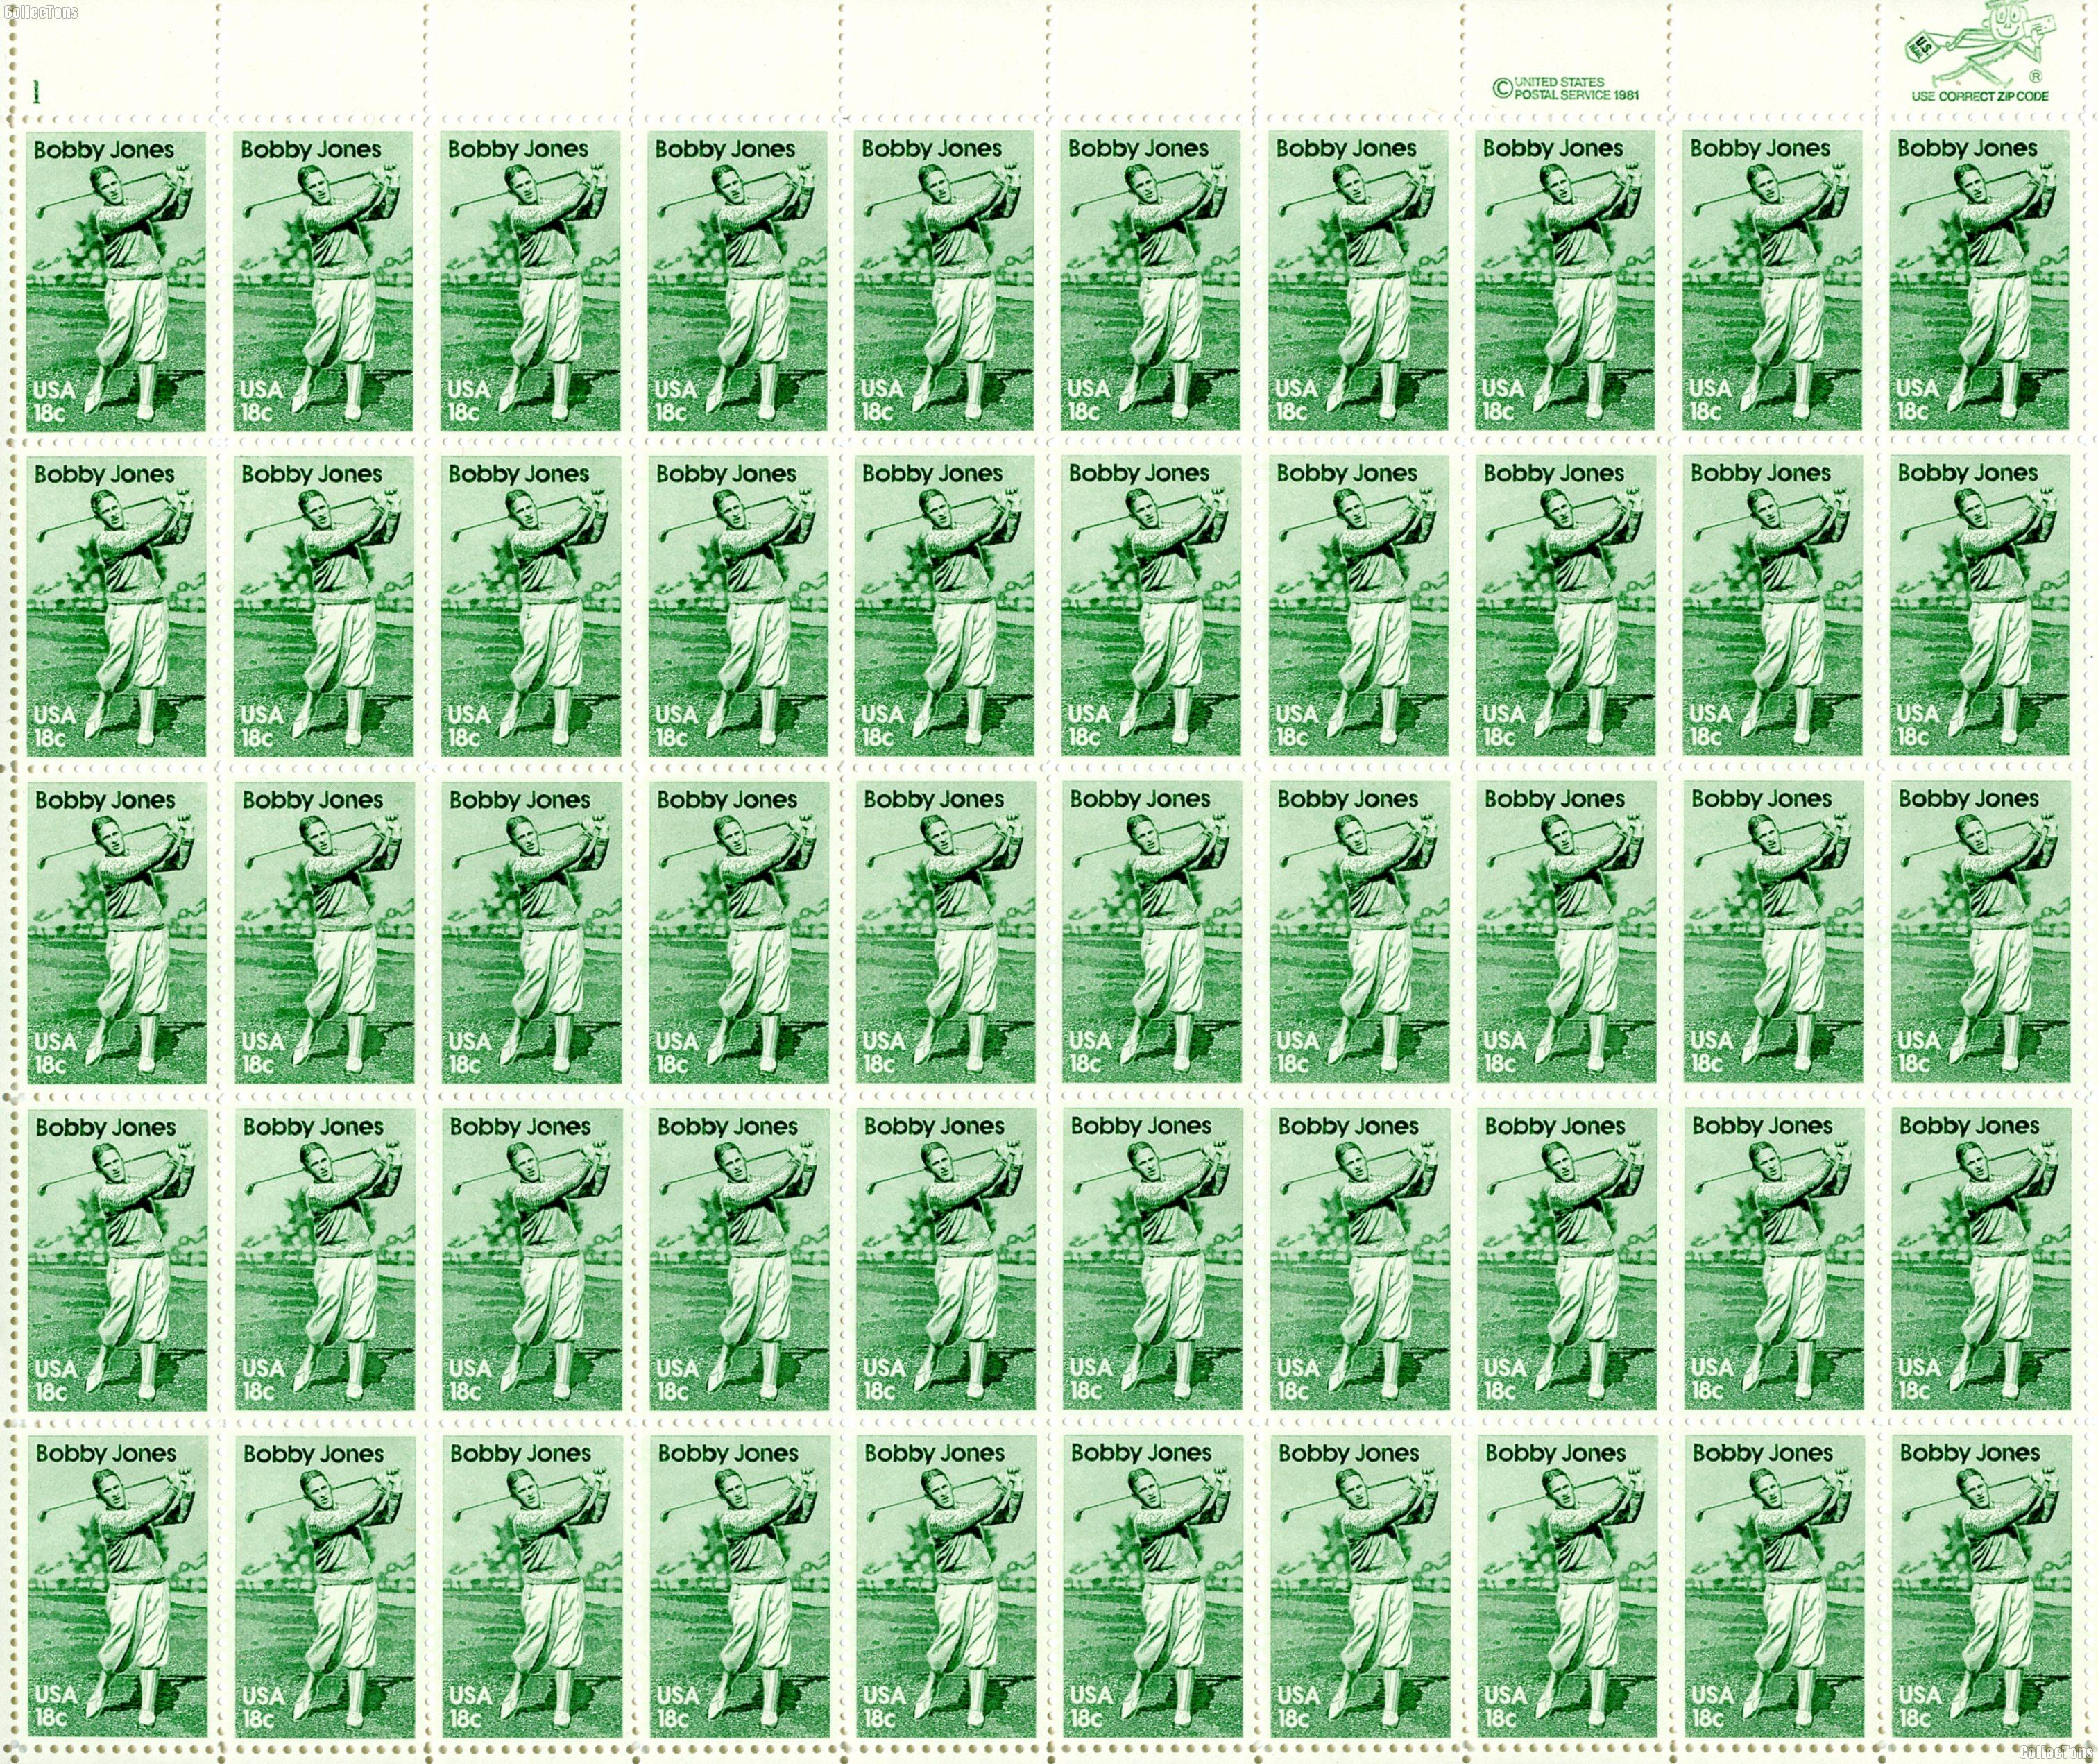 1981 Bobby Jones 18 Cent US Postage Stamp MNH Sheet of 50 Scott #1933